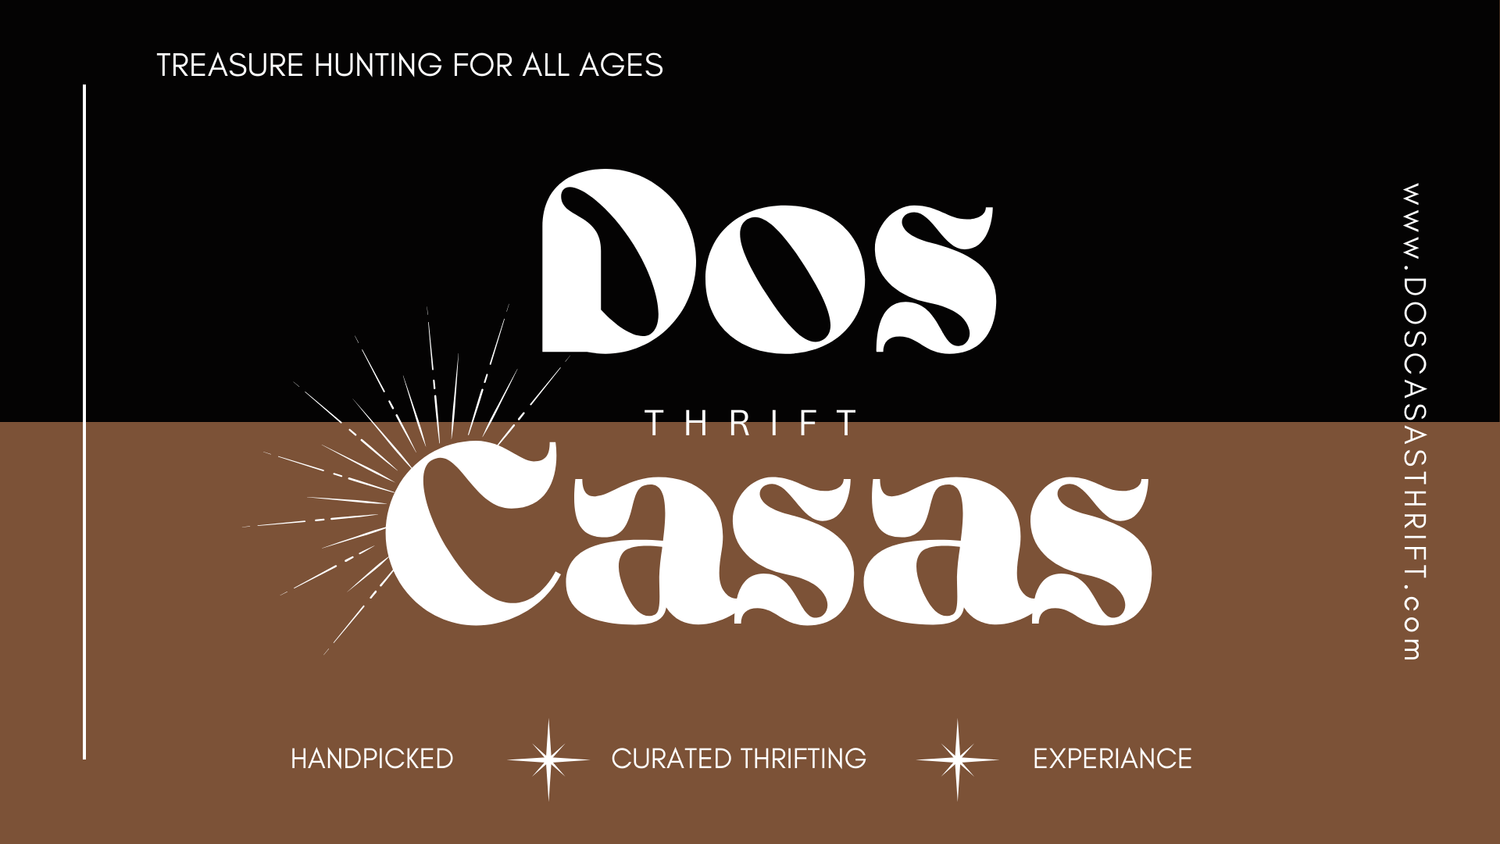 Dos Casas Thrift